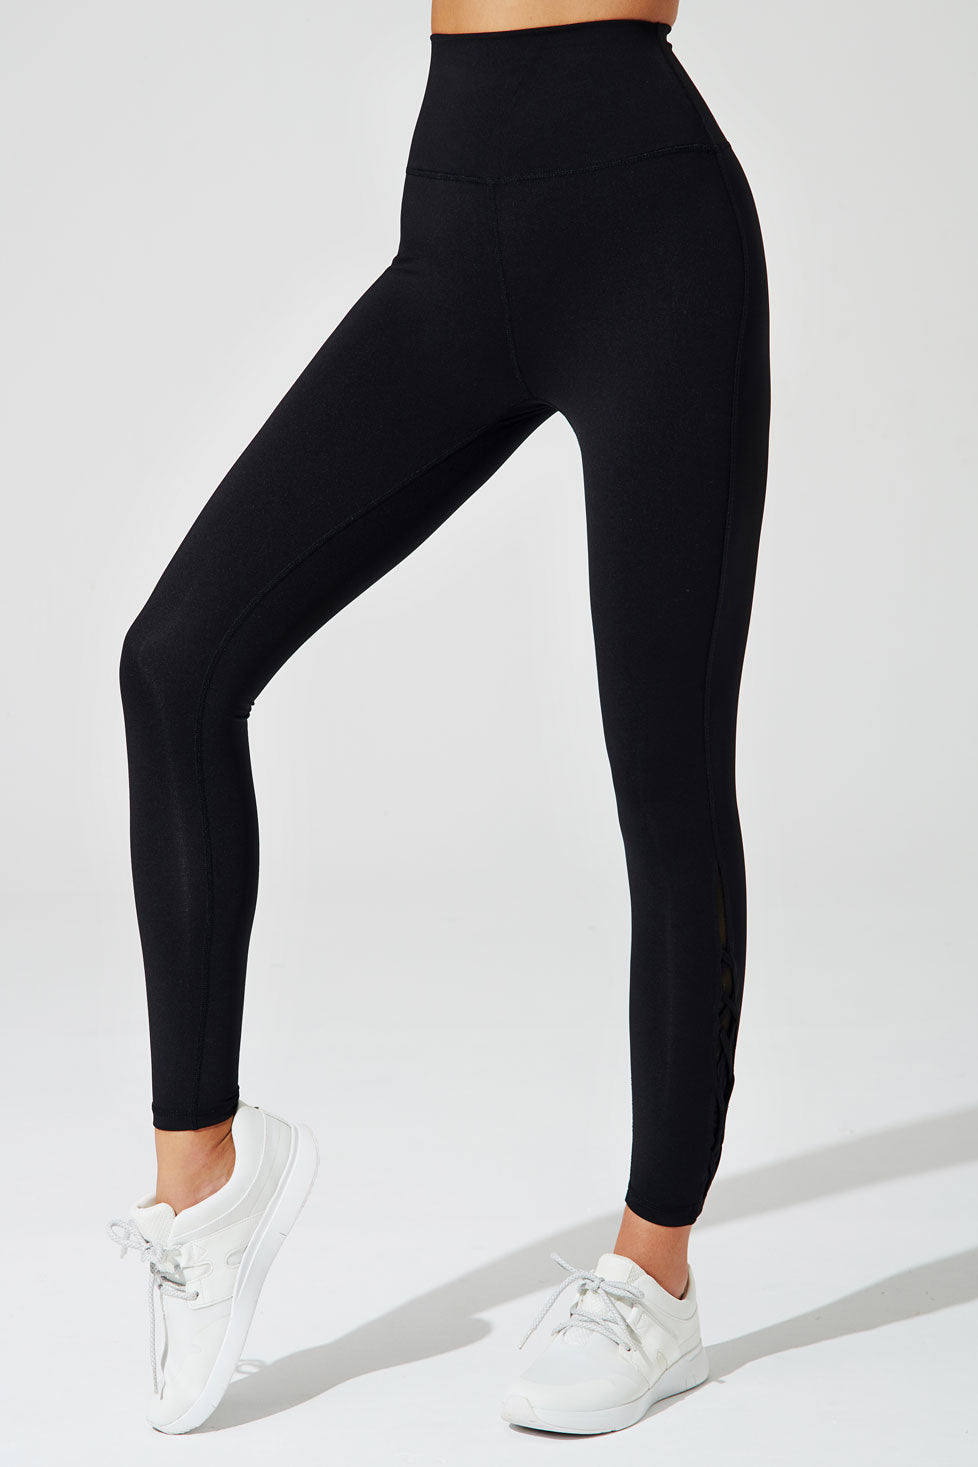 Stylish black high-waist leggings for women - Sangria 78 - OW-0126-WLG-BK - Image 1.